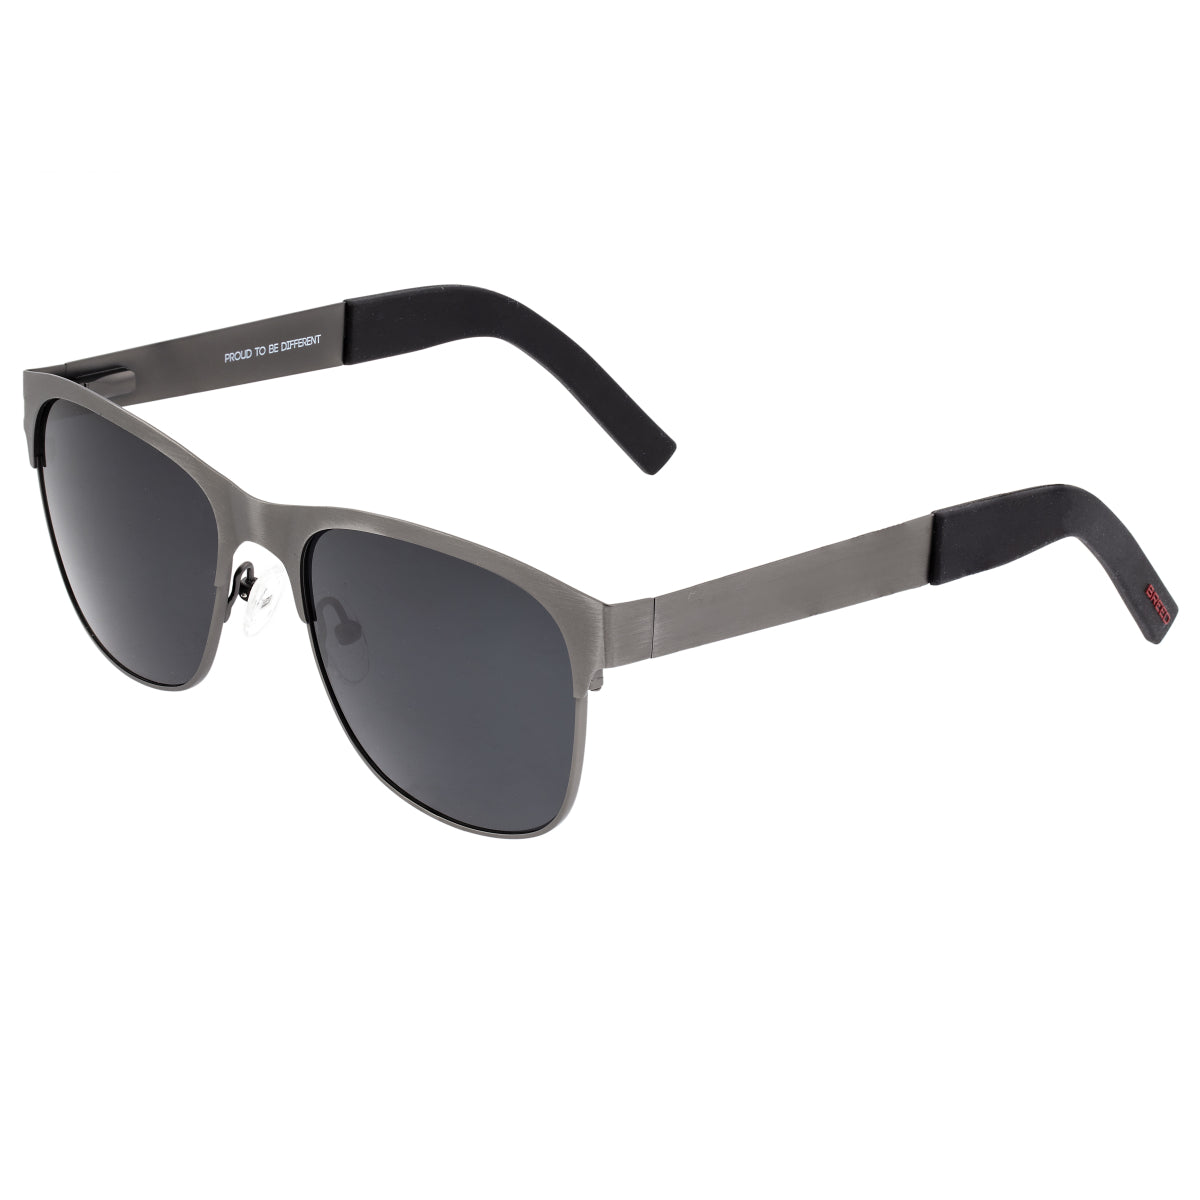 Breed Hypnos Titanium Polarized Sunglasses - Gunmetal/Black - BSG057GY